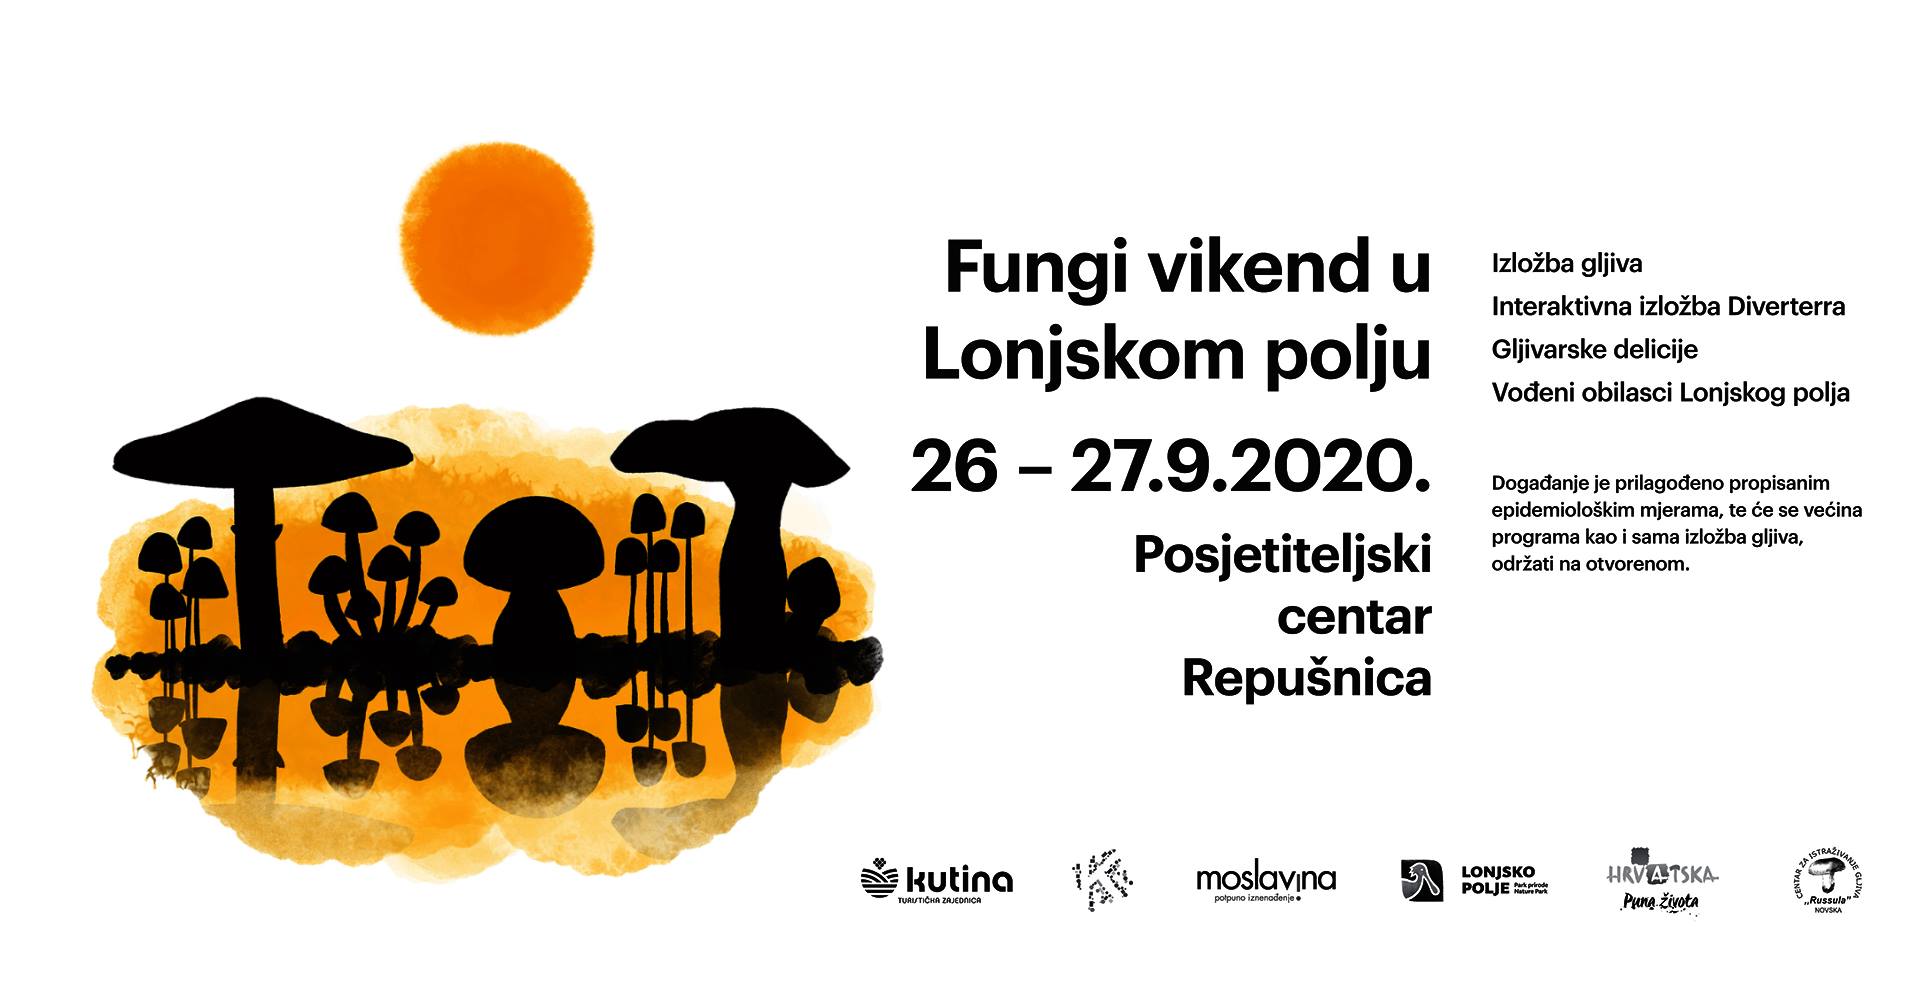 You are currently viewing Fungi vikend u Lonjskom polju 2020